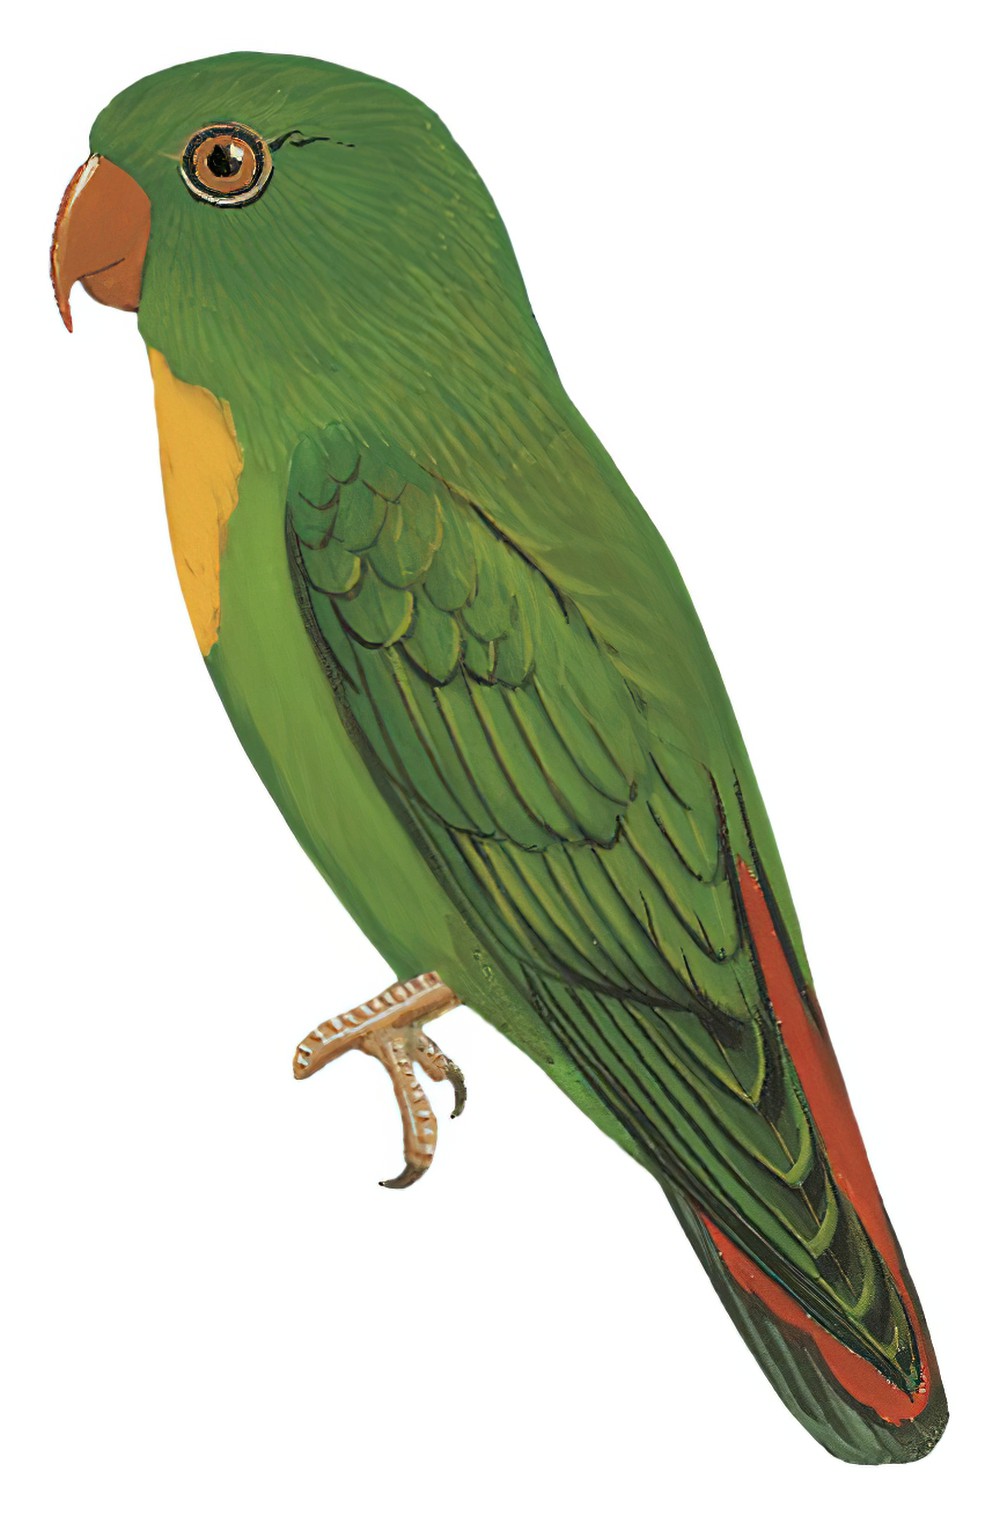 Yellow-throated Hanging-Parrot / Loriculus pusillus